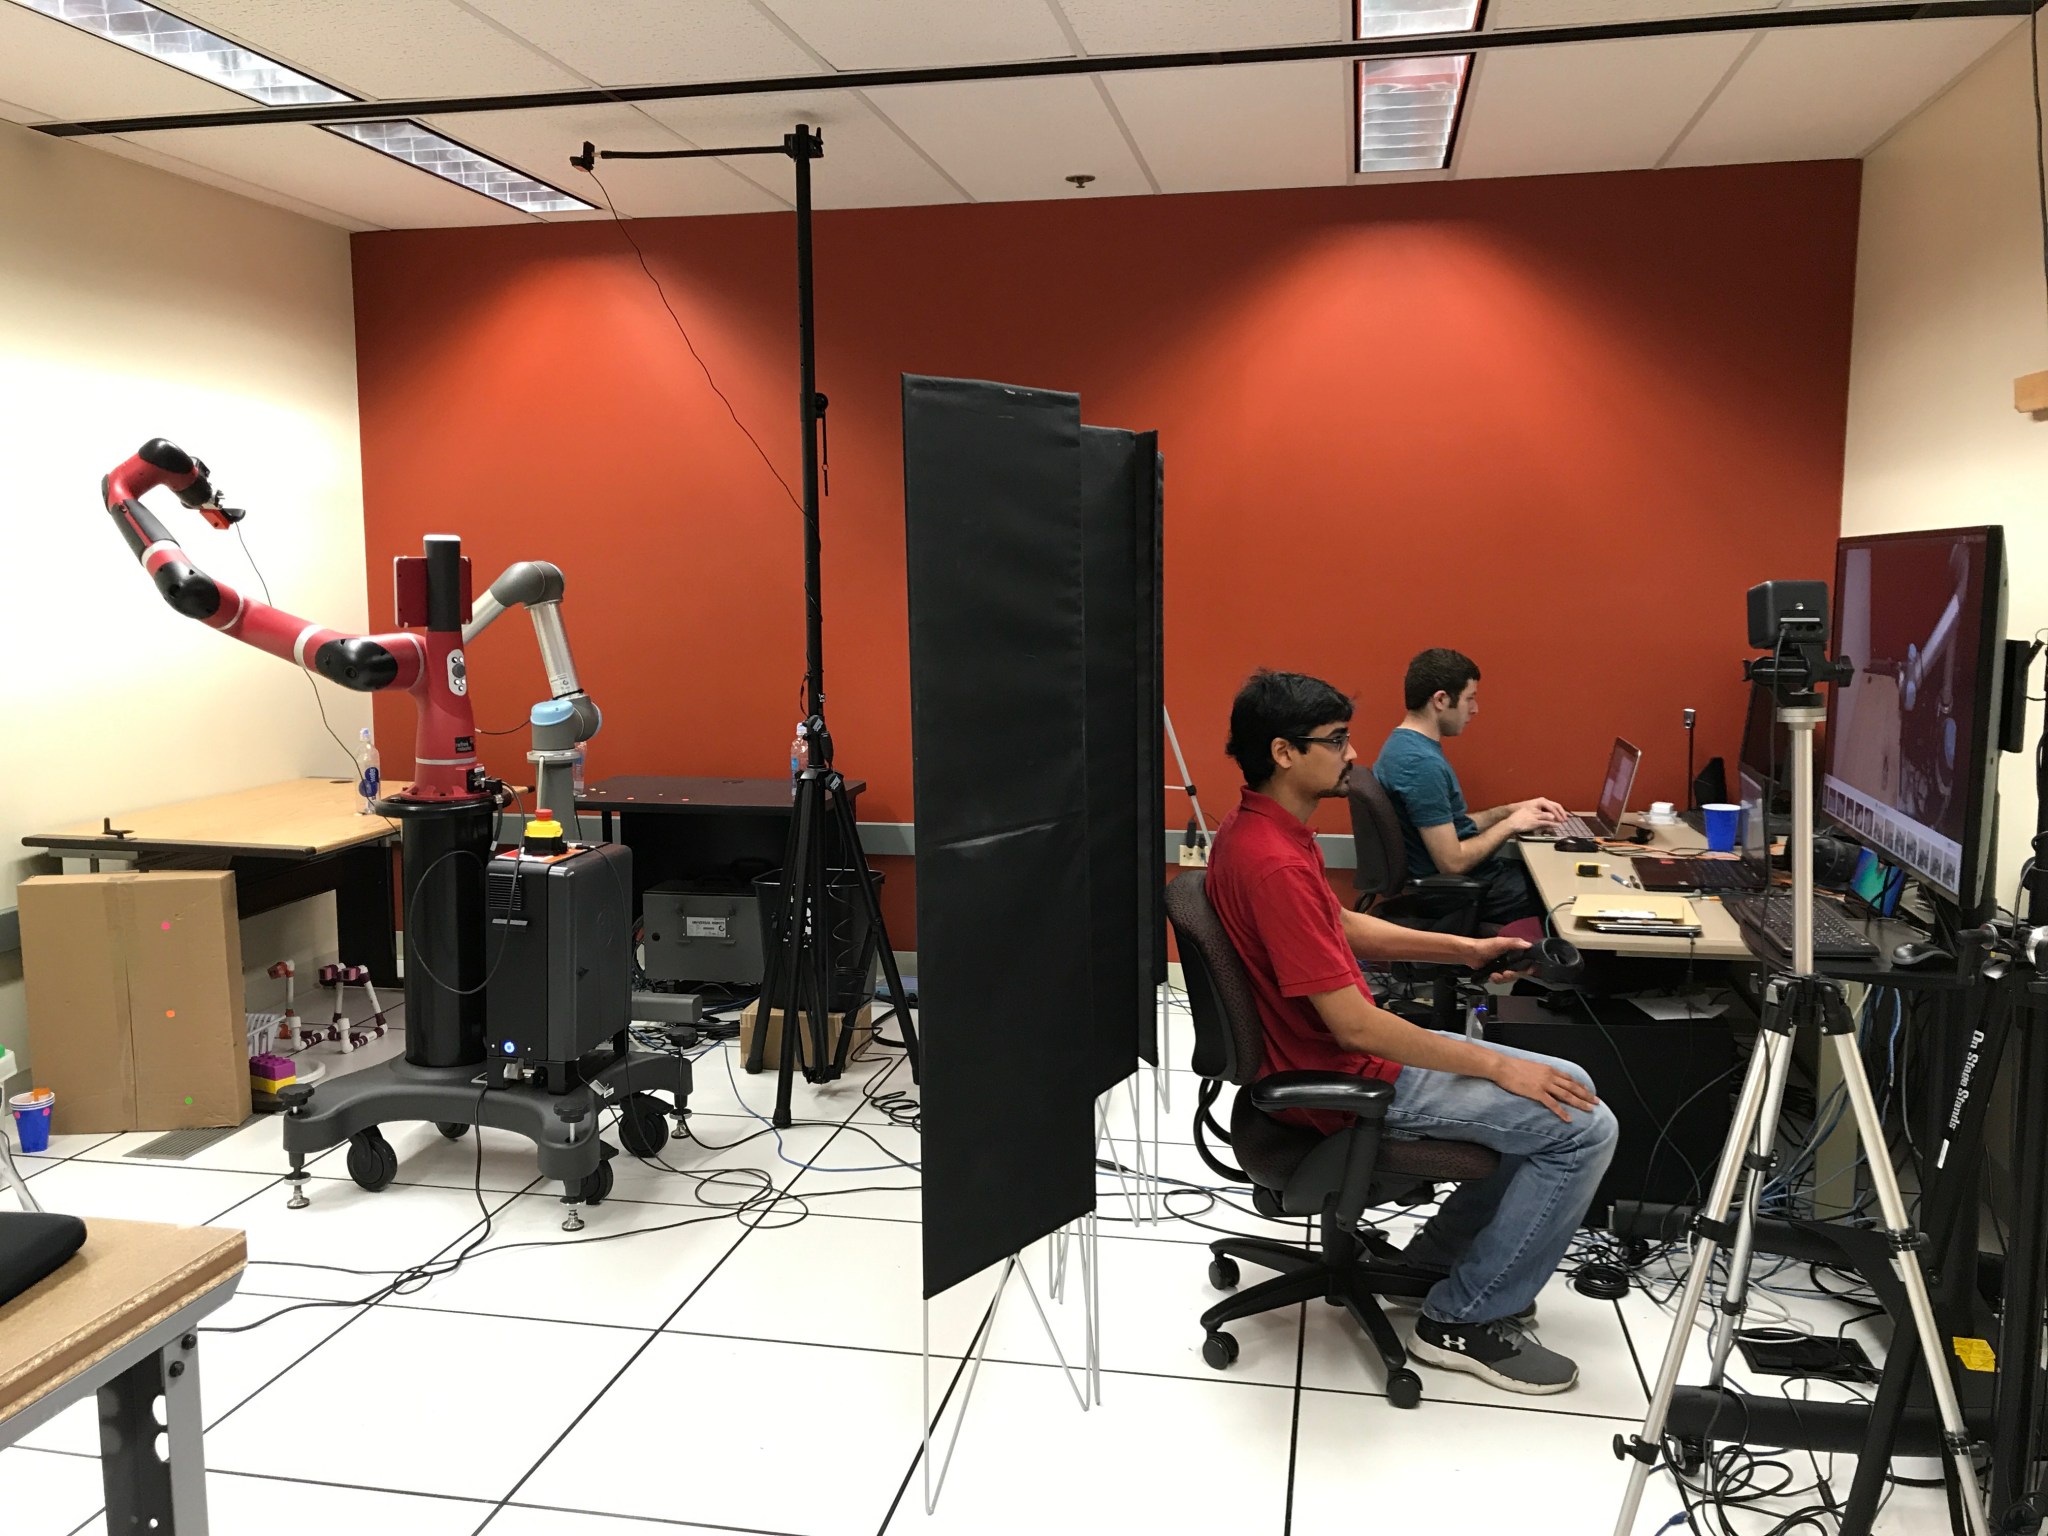 Students from University of Wisconsin, Madison exploring new ways to use robotics.